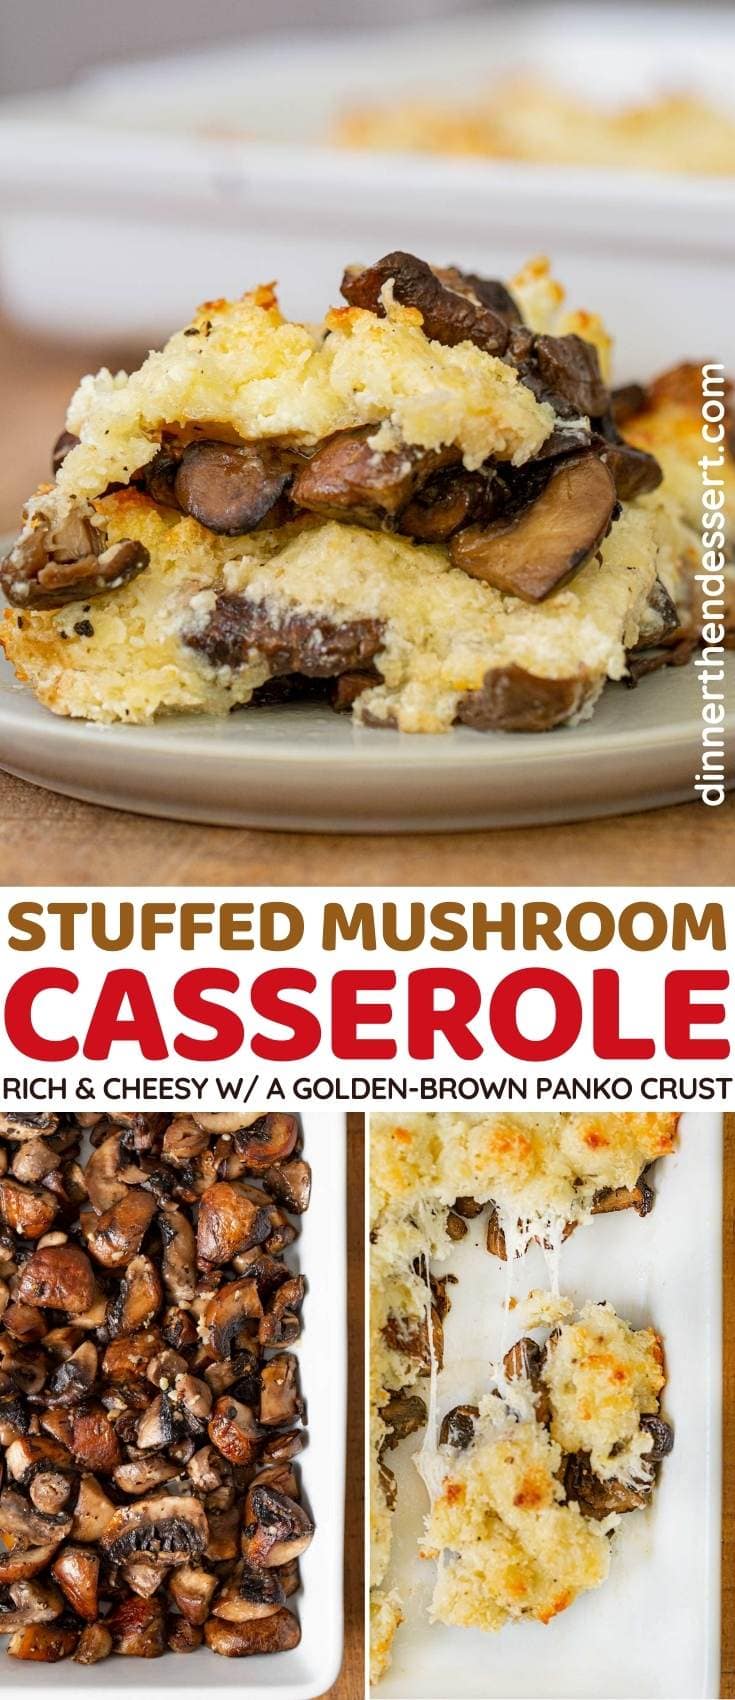 Stuffed Mushroom Casserole collage